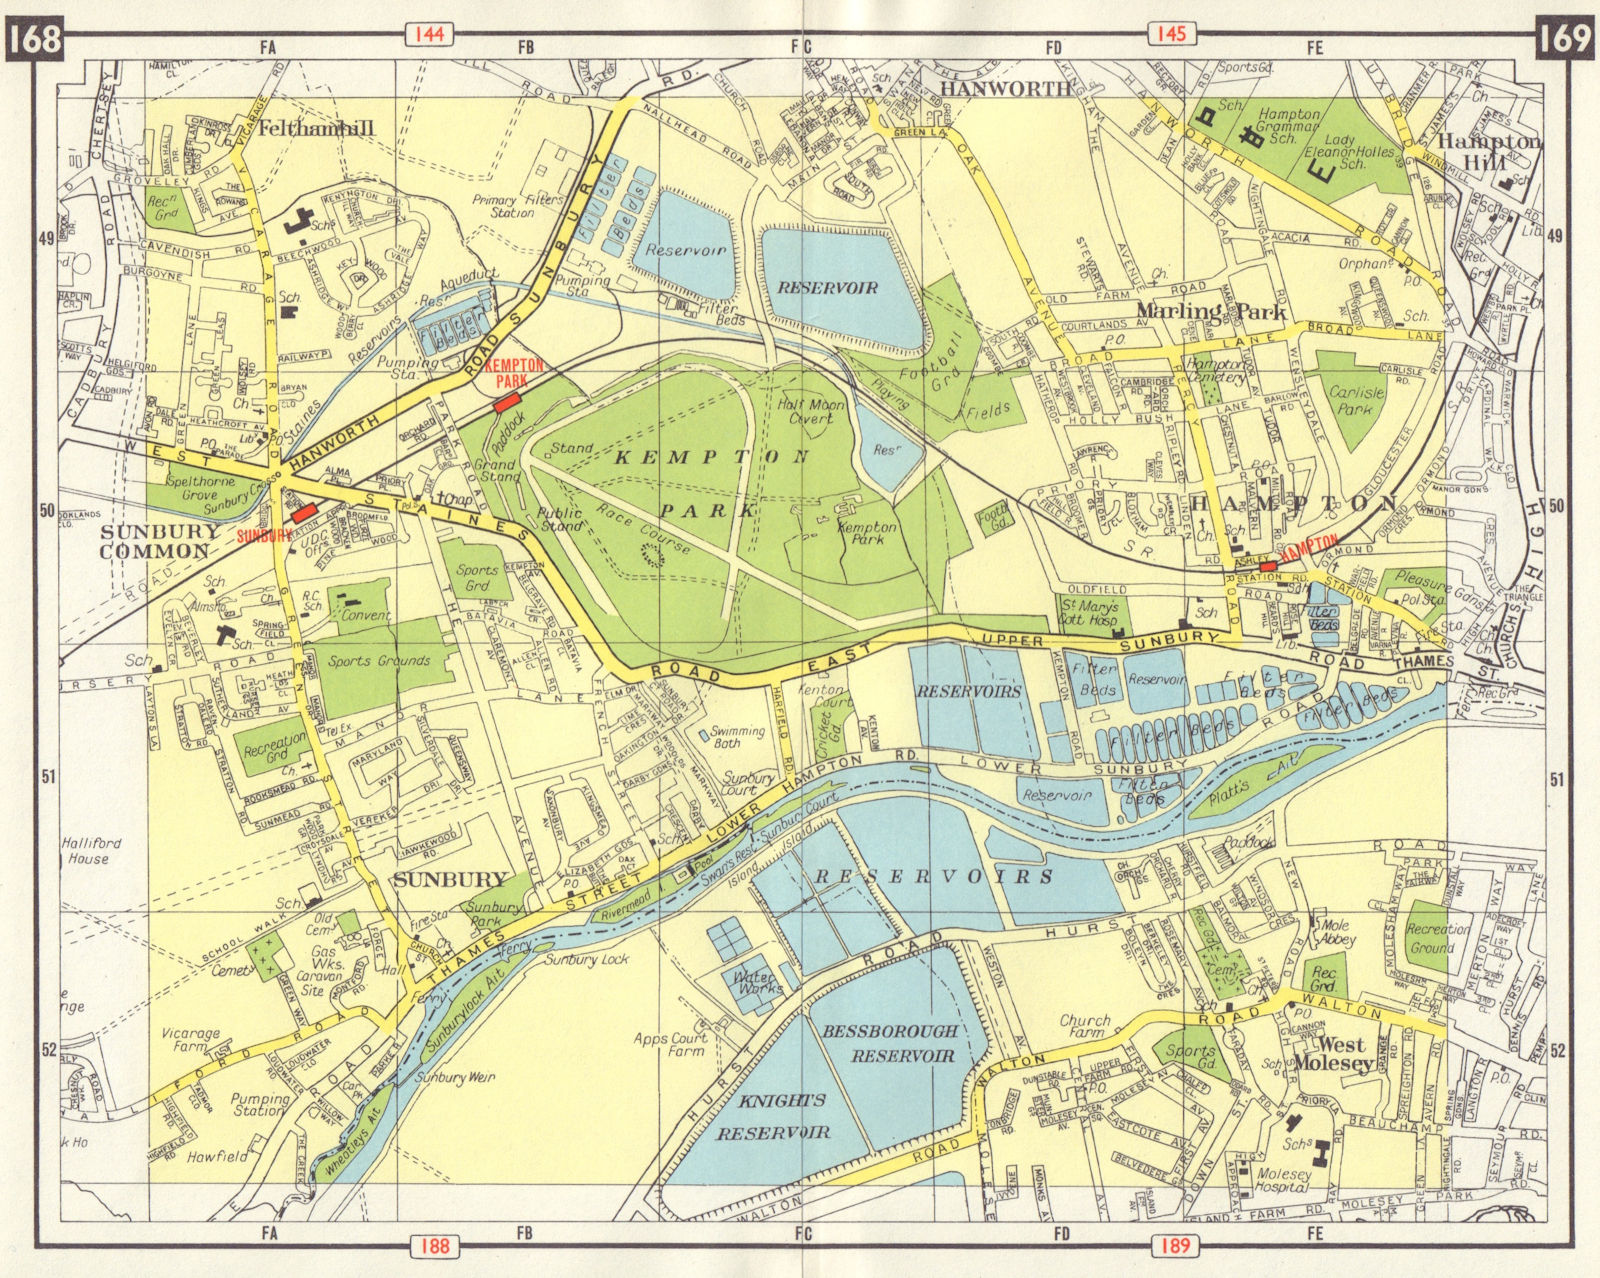 SW LONDON Sunbury Hampton West Molesey Kempton Park Hanworth Feltham 1965 map